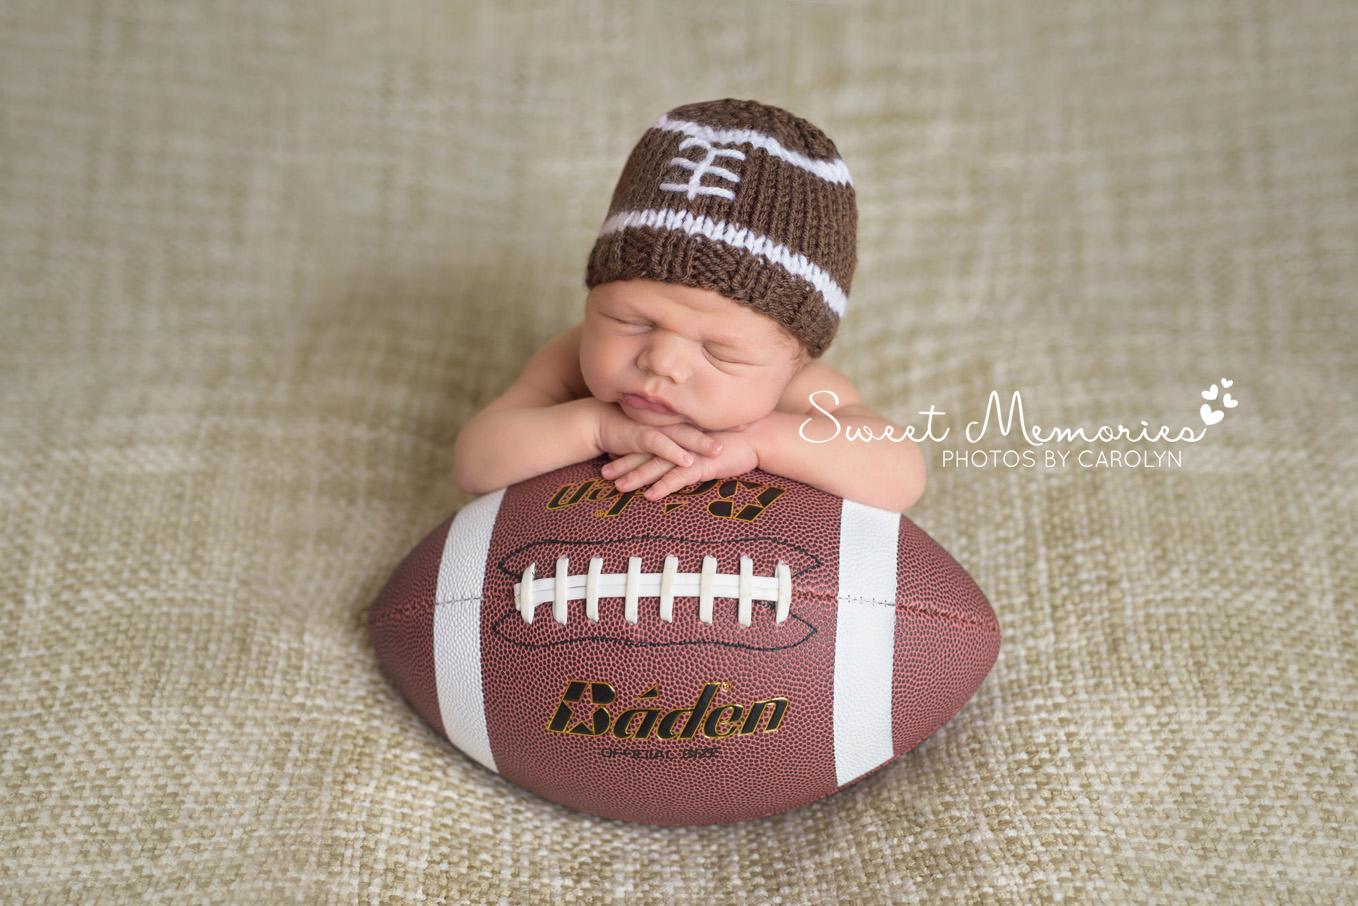 Sweet Memories Photos by Carolyn | Willow Grove PA | Bucks County Montgomery County Newborn Infant Baby Photographer | newborn baby boy sleeping on football